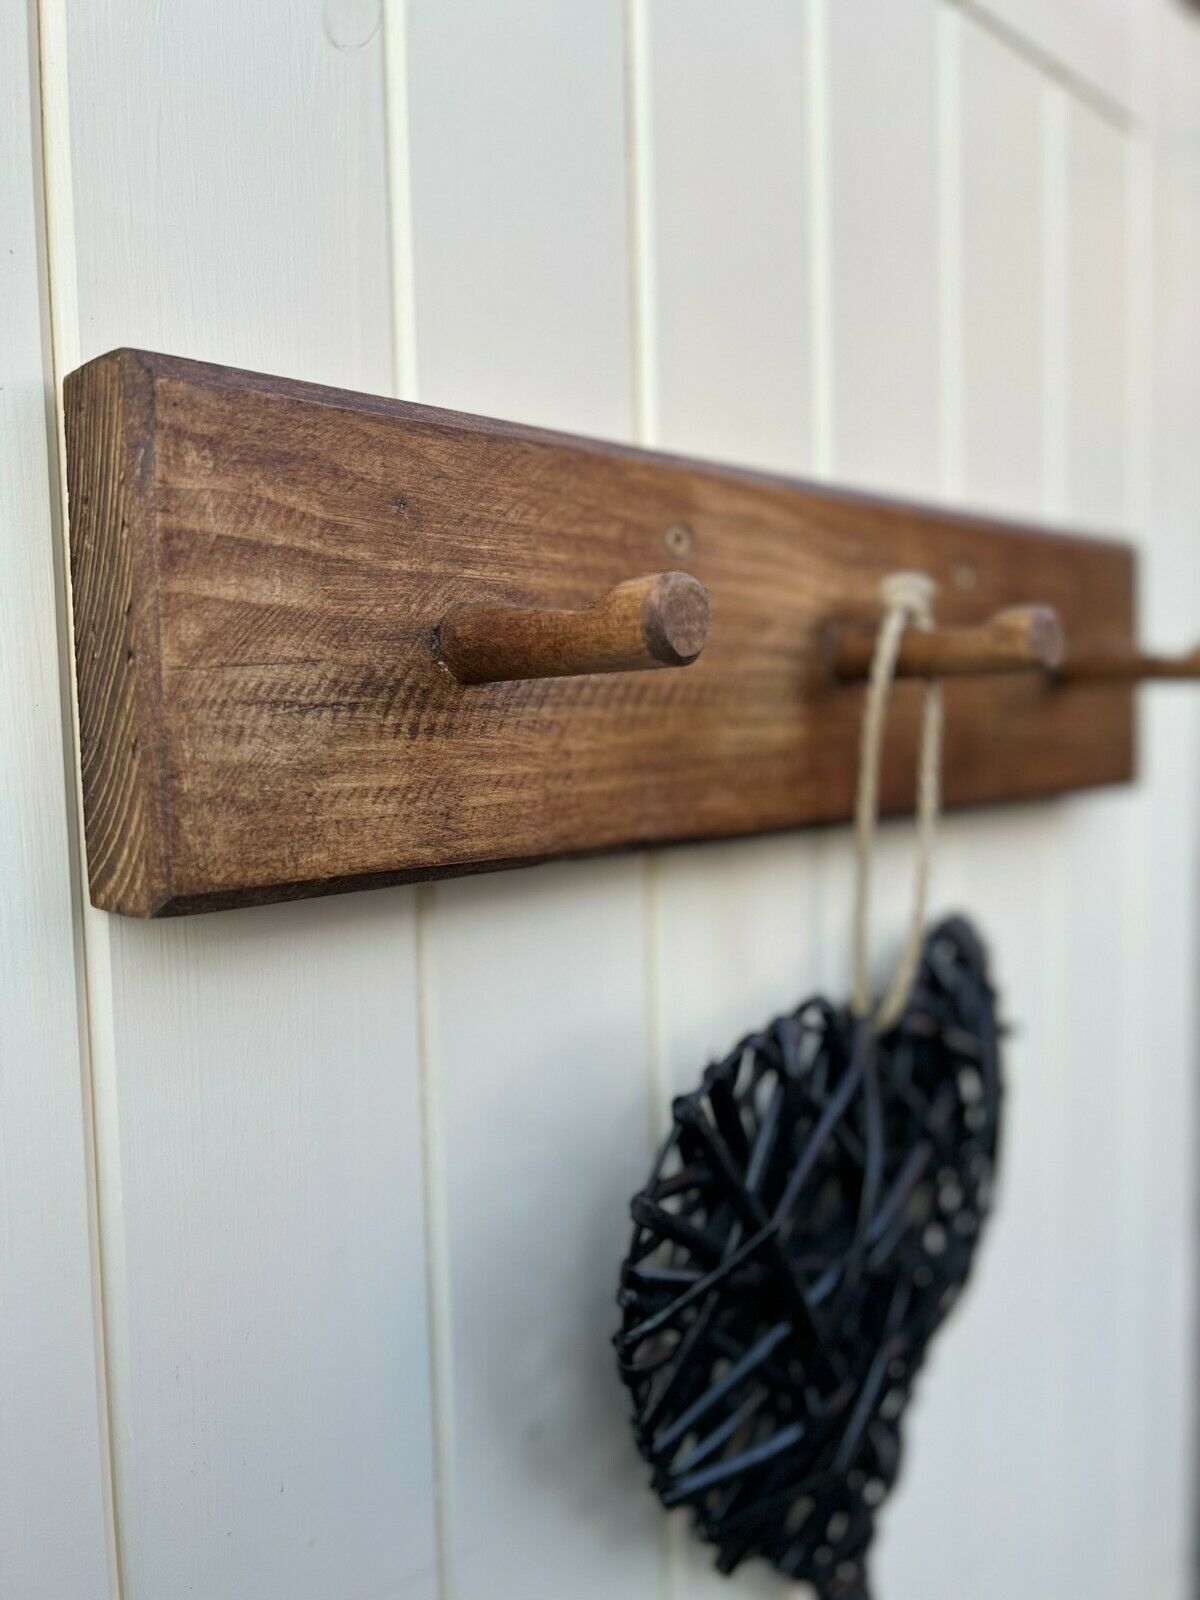 Rustic Farmhouse Wooden Coat Hook Rack Pegs Handmade Shabby Chic Bag Hook Home